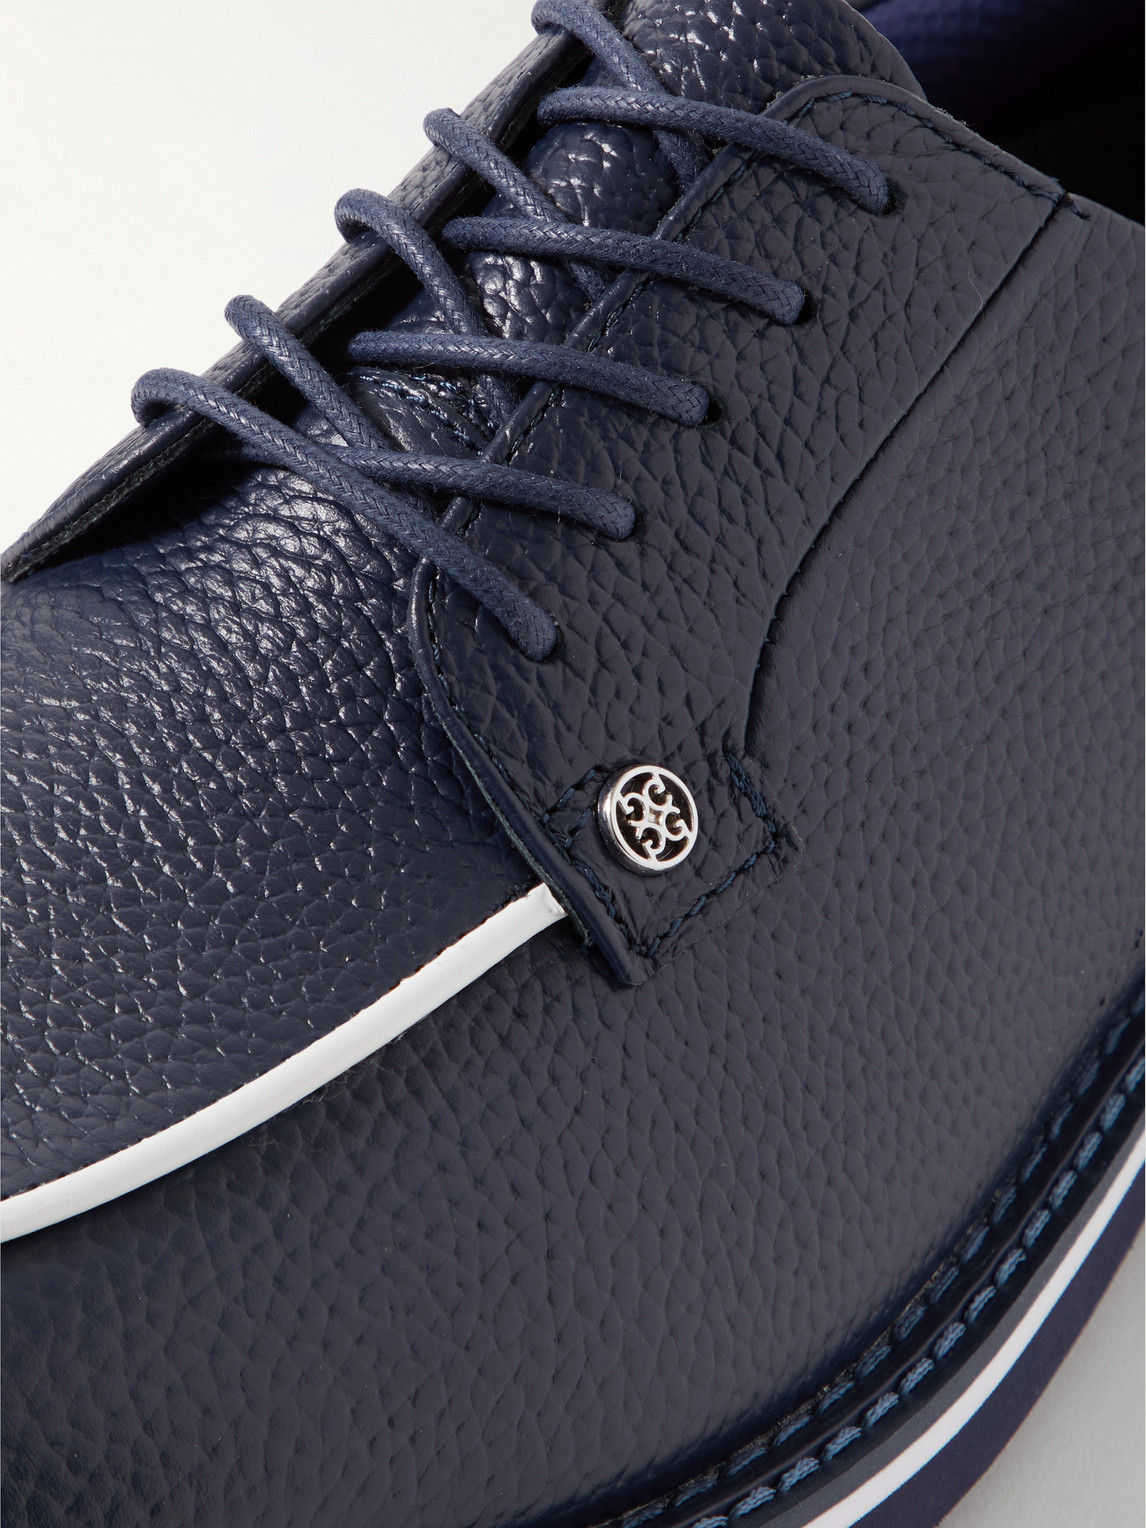 Shop G/fore Gallivanter Apron-toe Pebble-grain Leather Golf Shoes In Blue